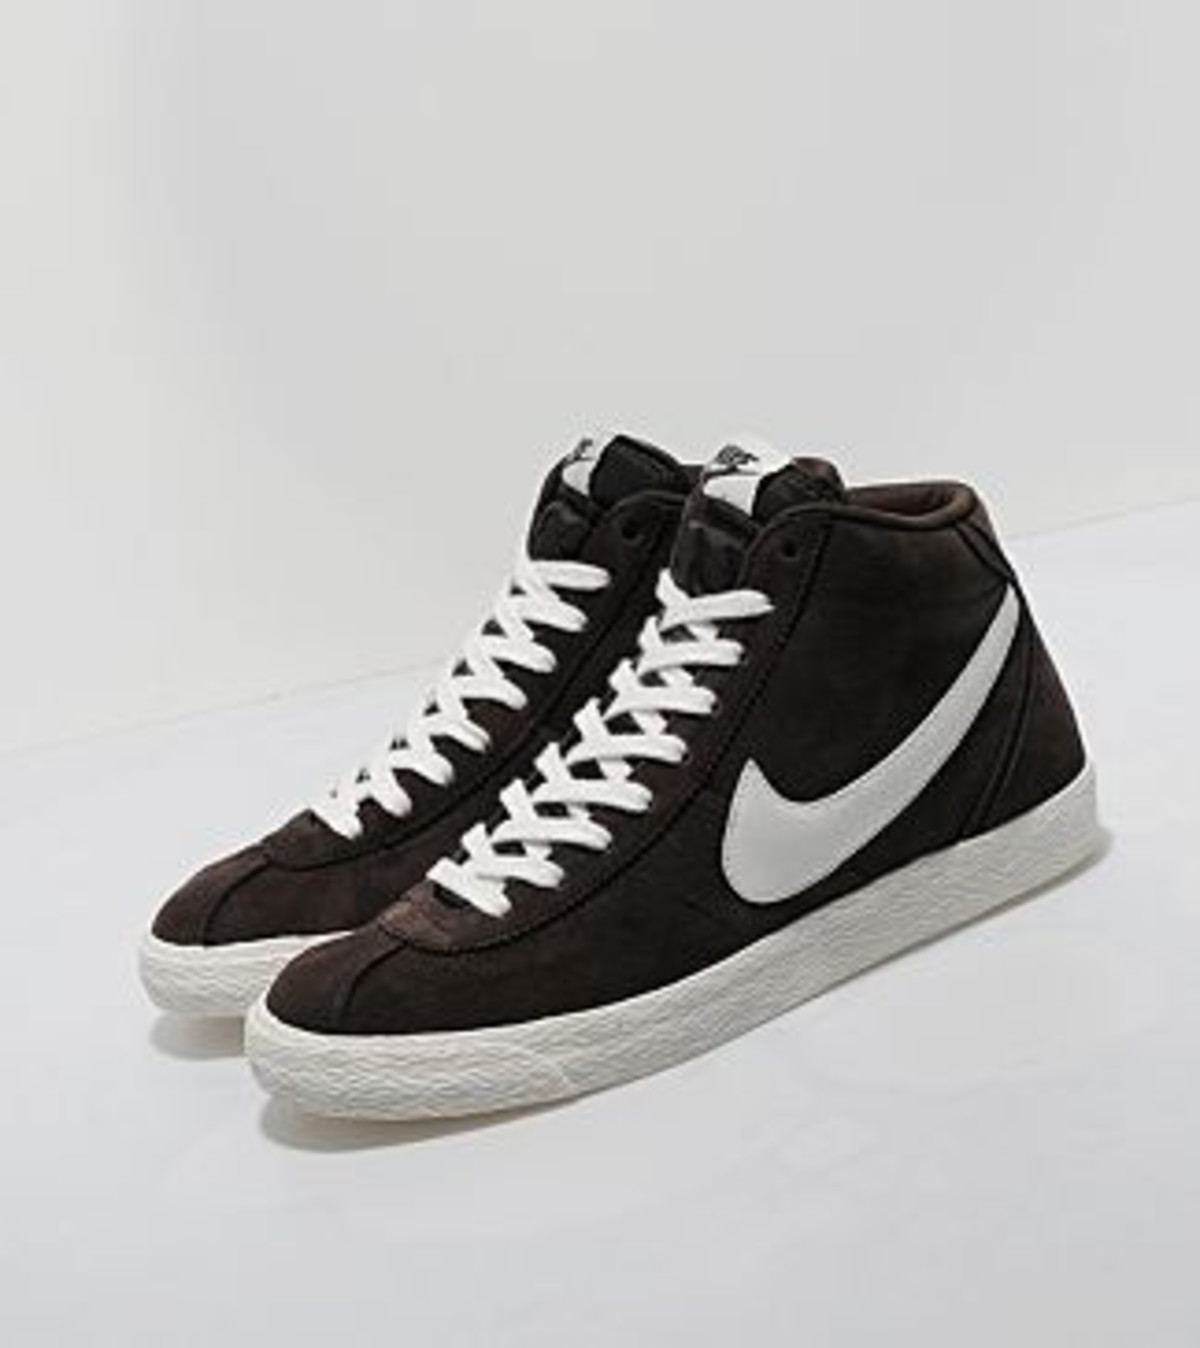 Nike Bruin Mid “Brown/White” | Complex